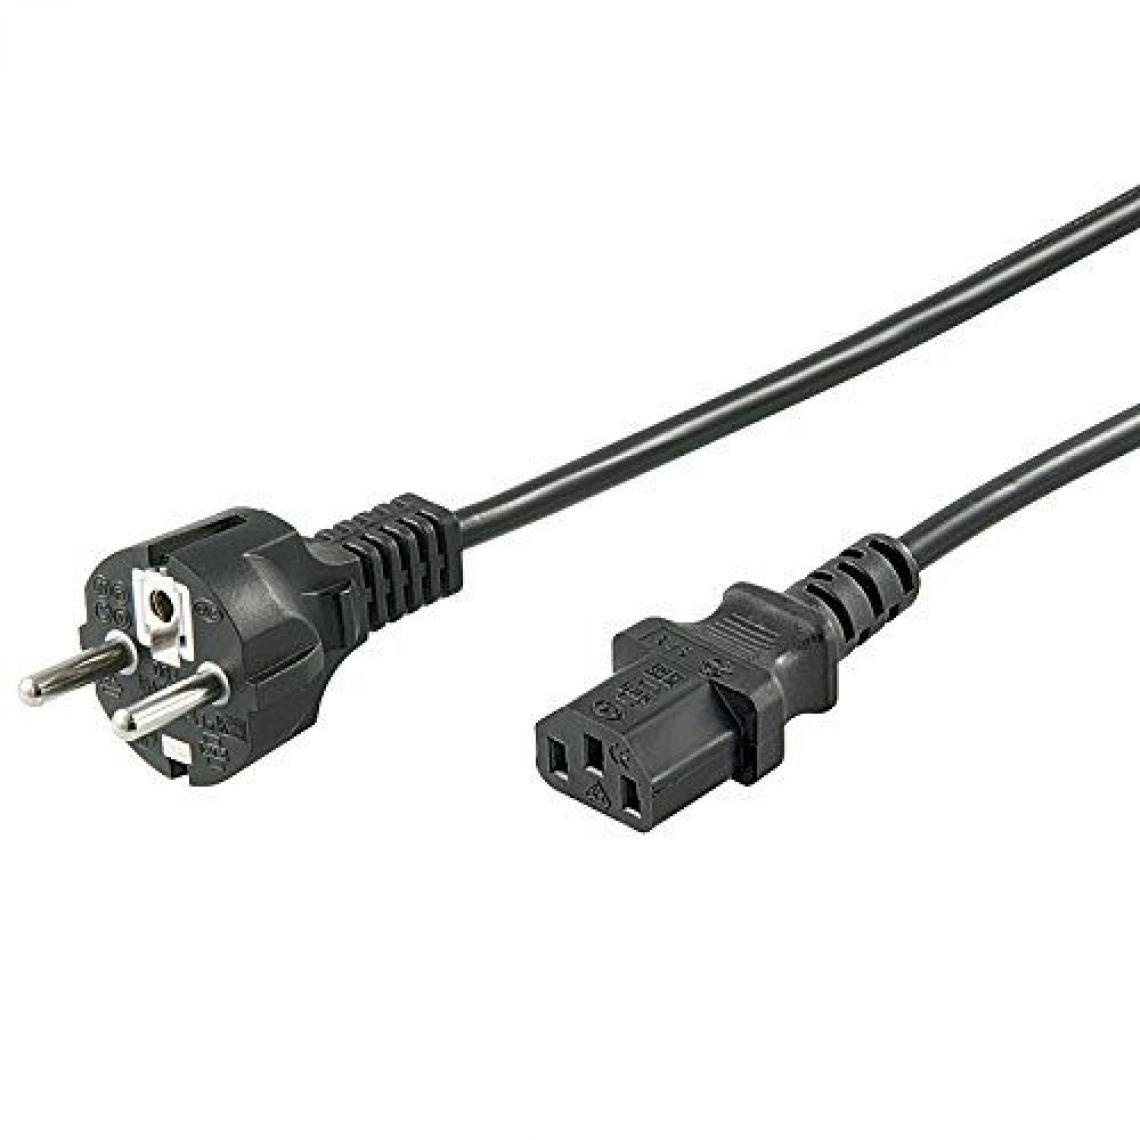 Inconnu - Goobay Câble d'alimentation 3 m, fiche Schuko (type F, CEE 7/7) vers Appareil femelle C13 Noir - Câble antenne